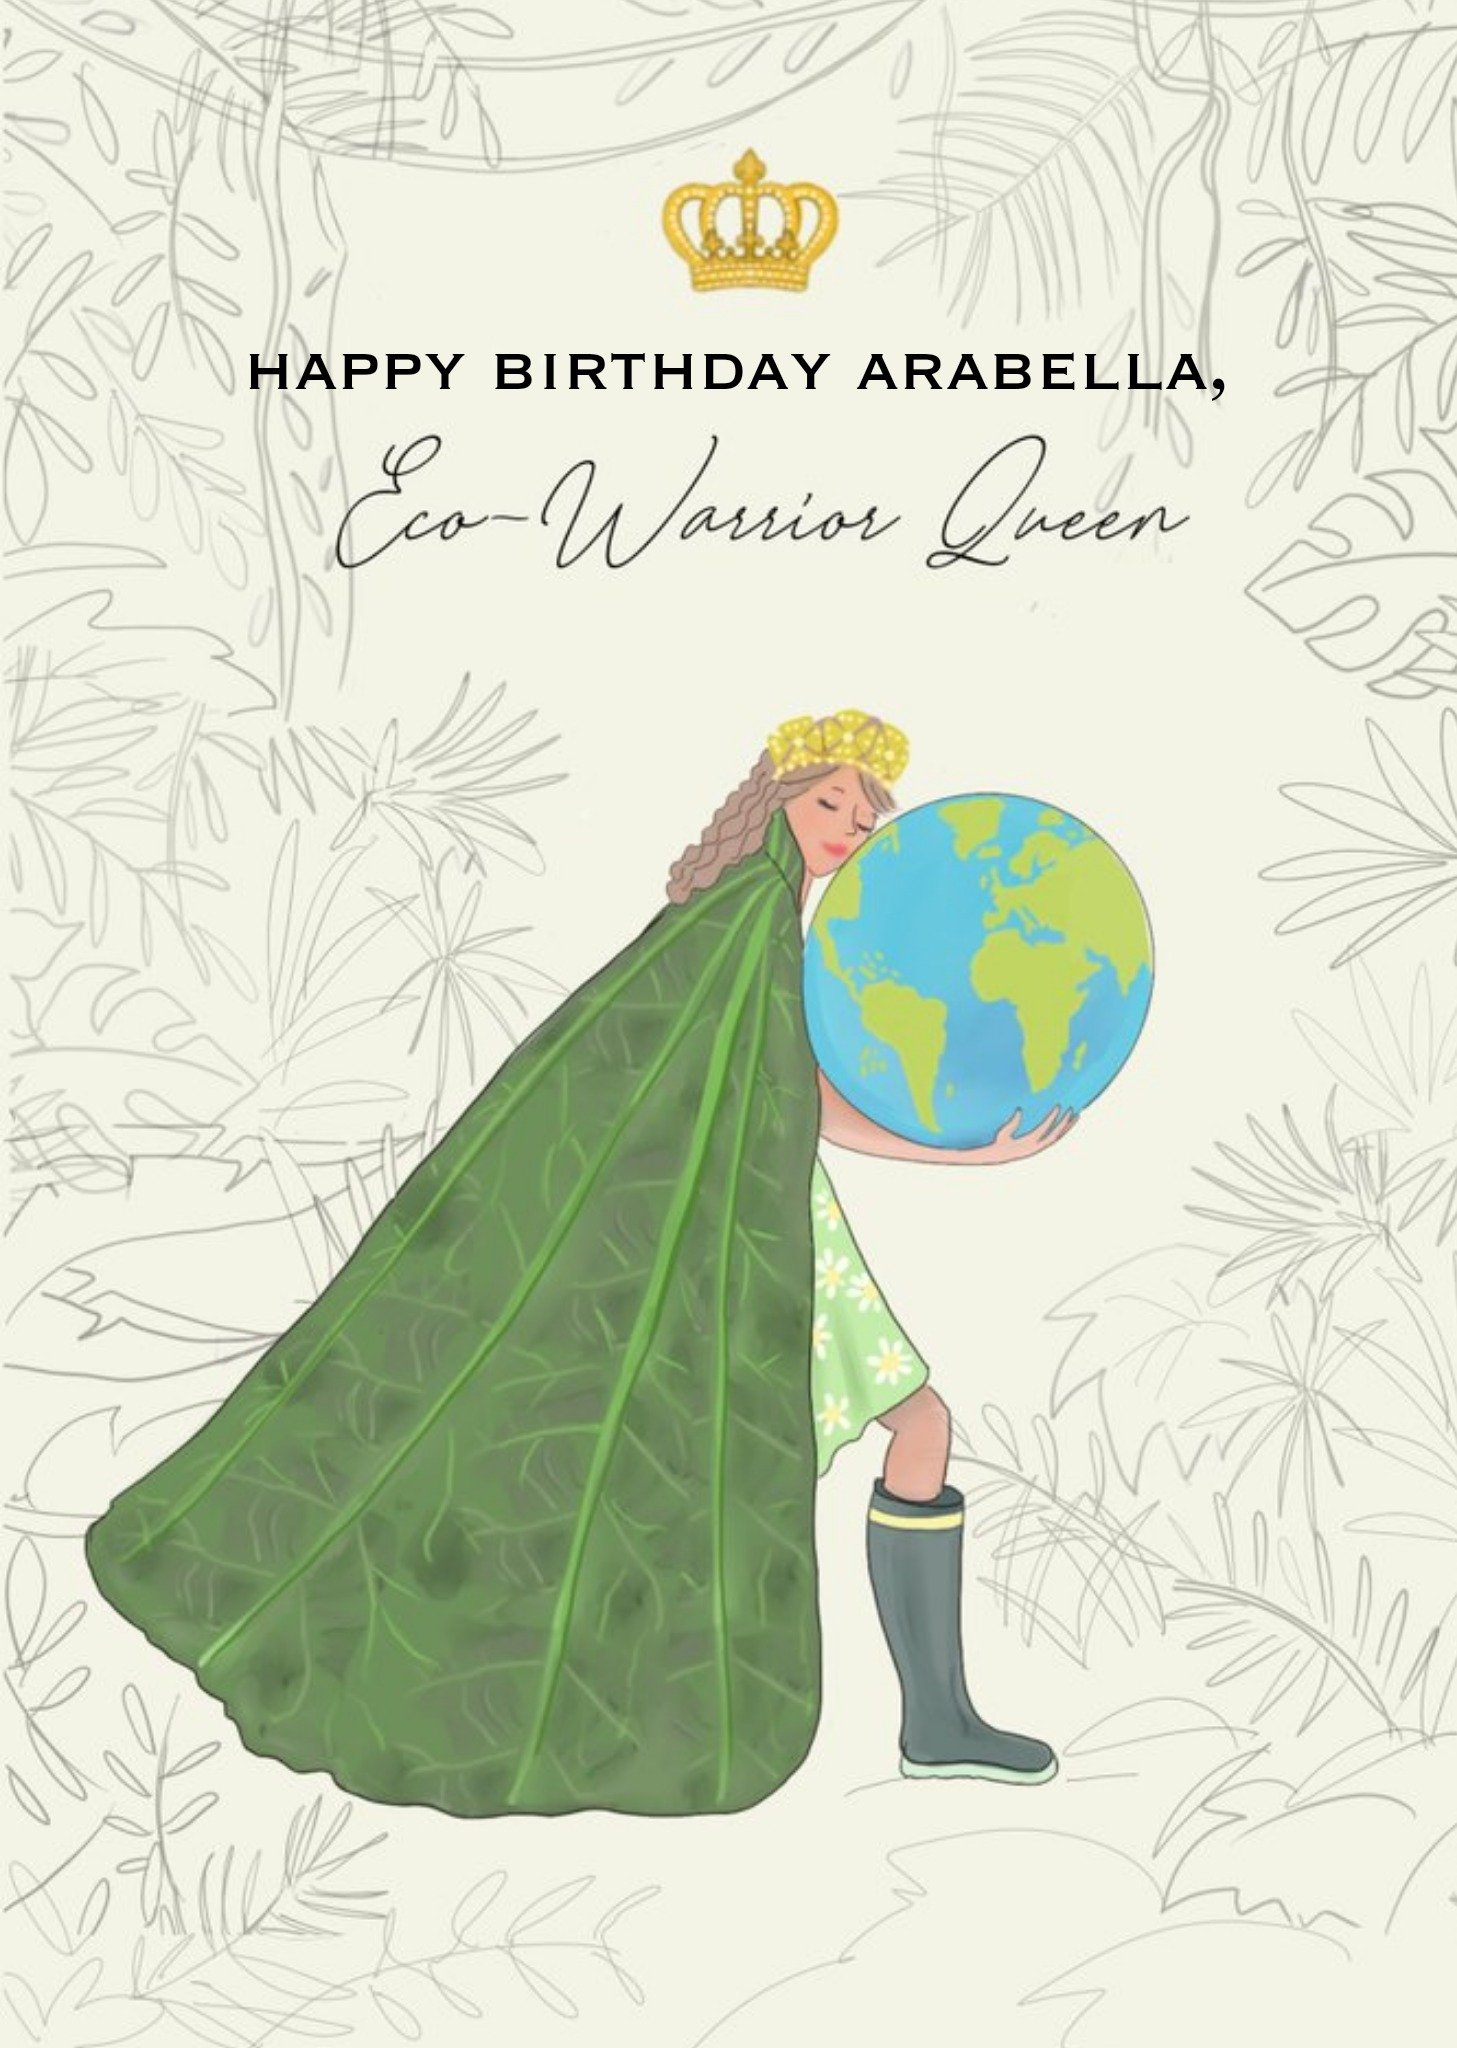 Moonpig Illustration Of An Eco Warrior Queen Happy Birthday Card Ecard